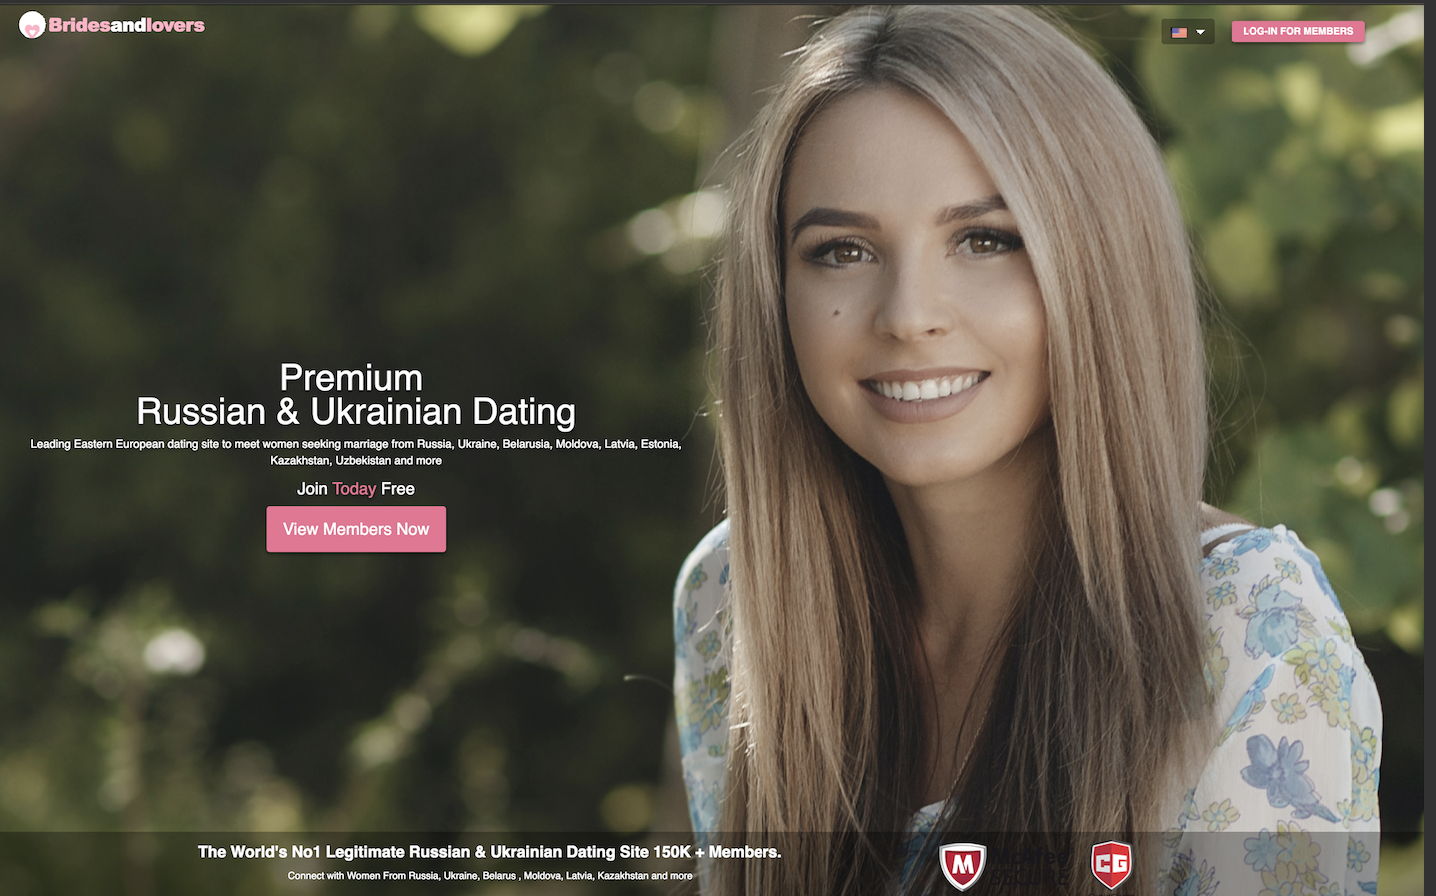 Ukrainian Brides: Find the Best Single Ukrainian Women for Marriage (2021) - LadaDate